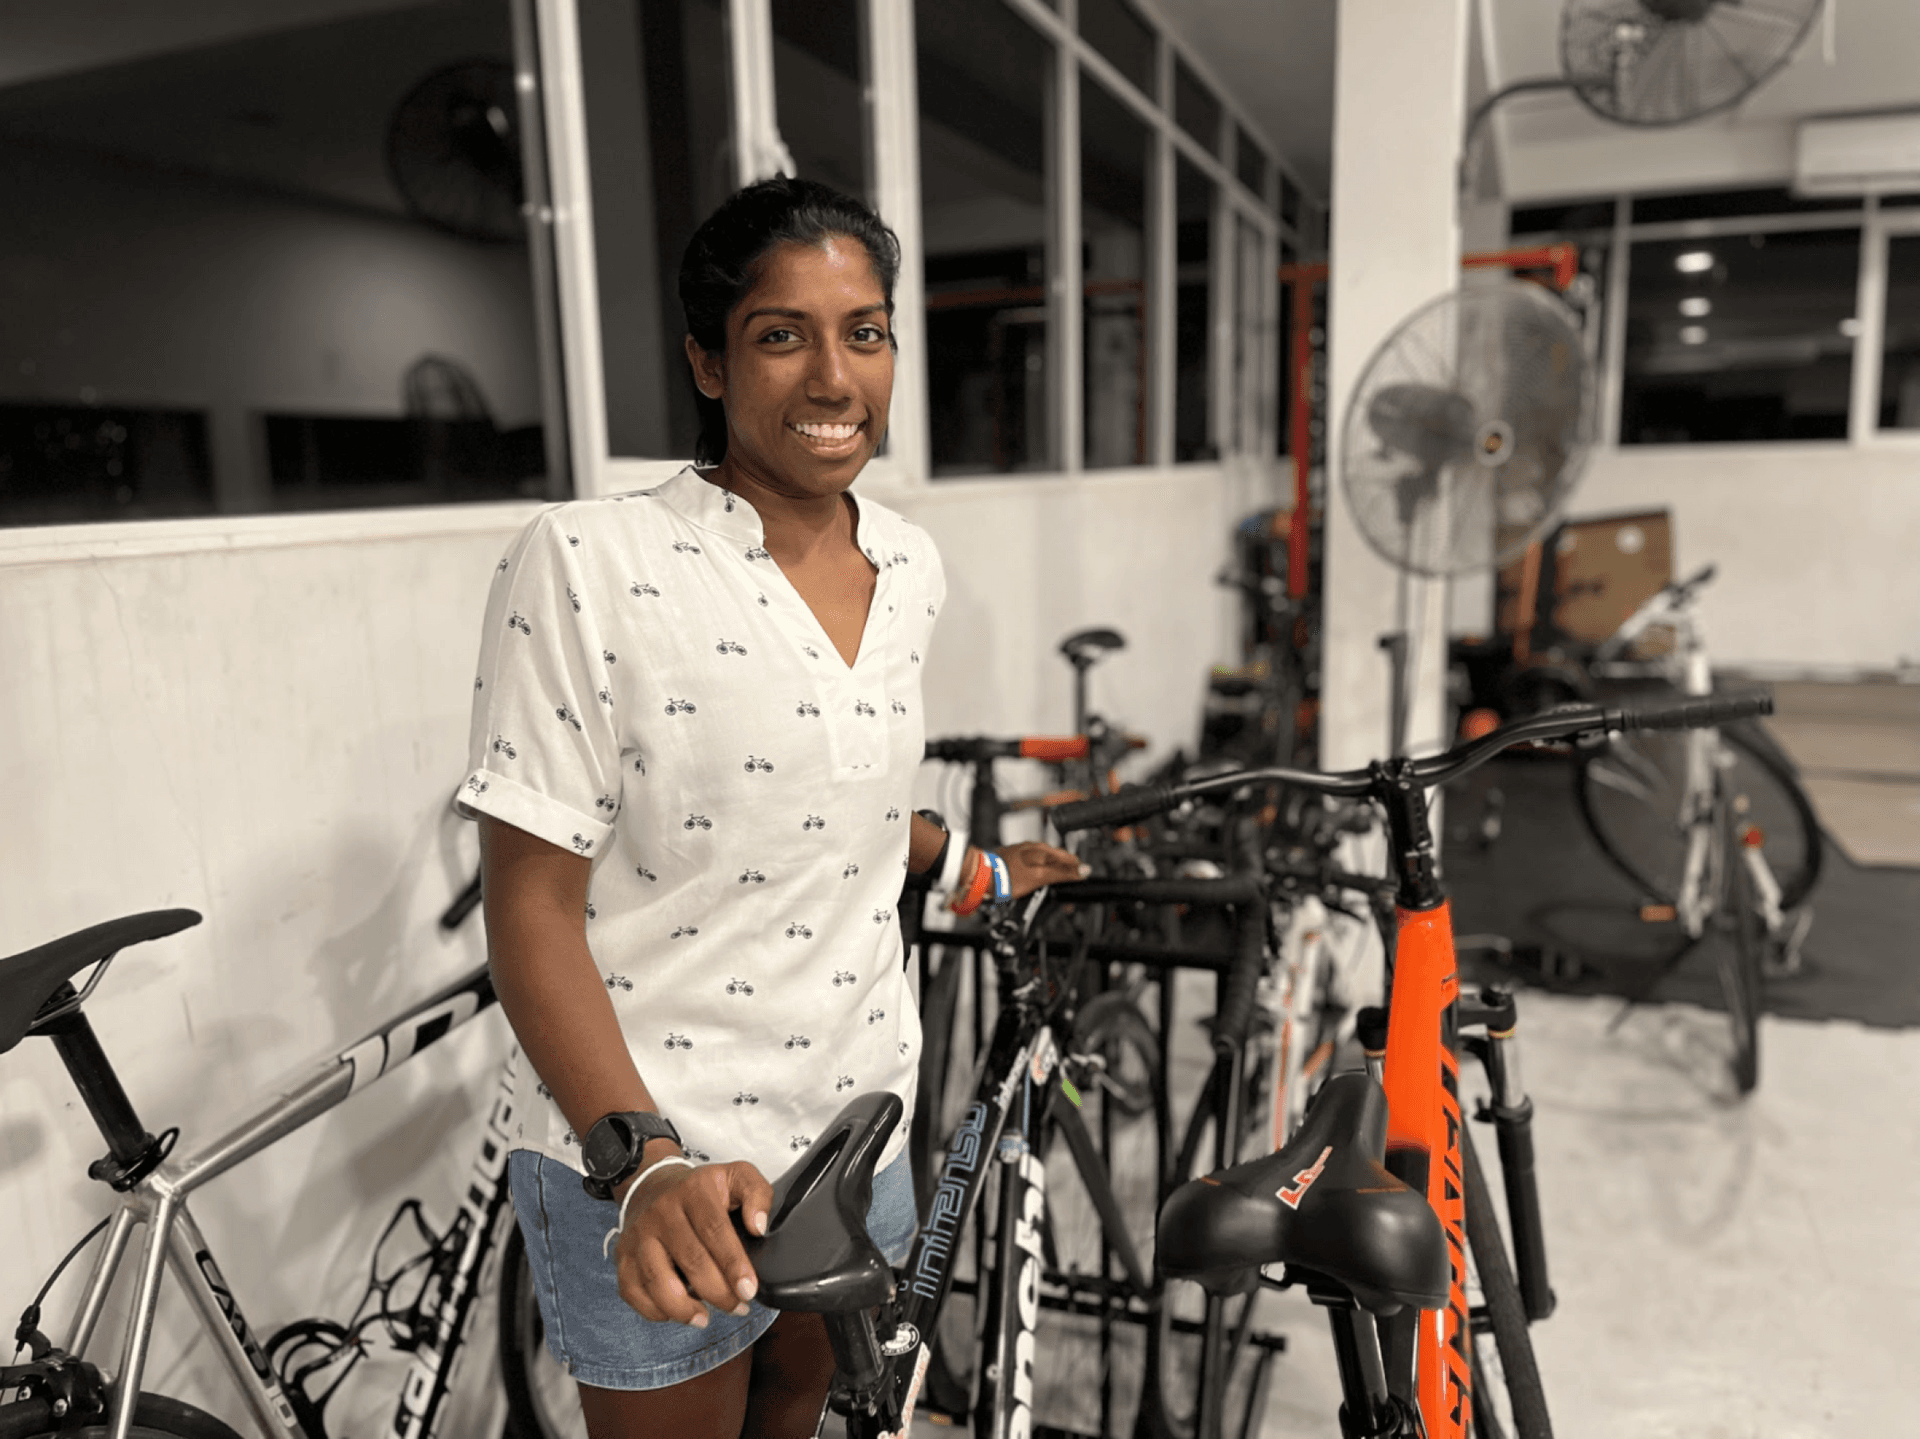 Amateur triathlete Deethri Samarajeewa says many of her friends have started biking due to Sri Lanka’s fuel crisis.